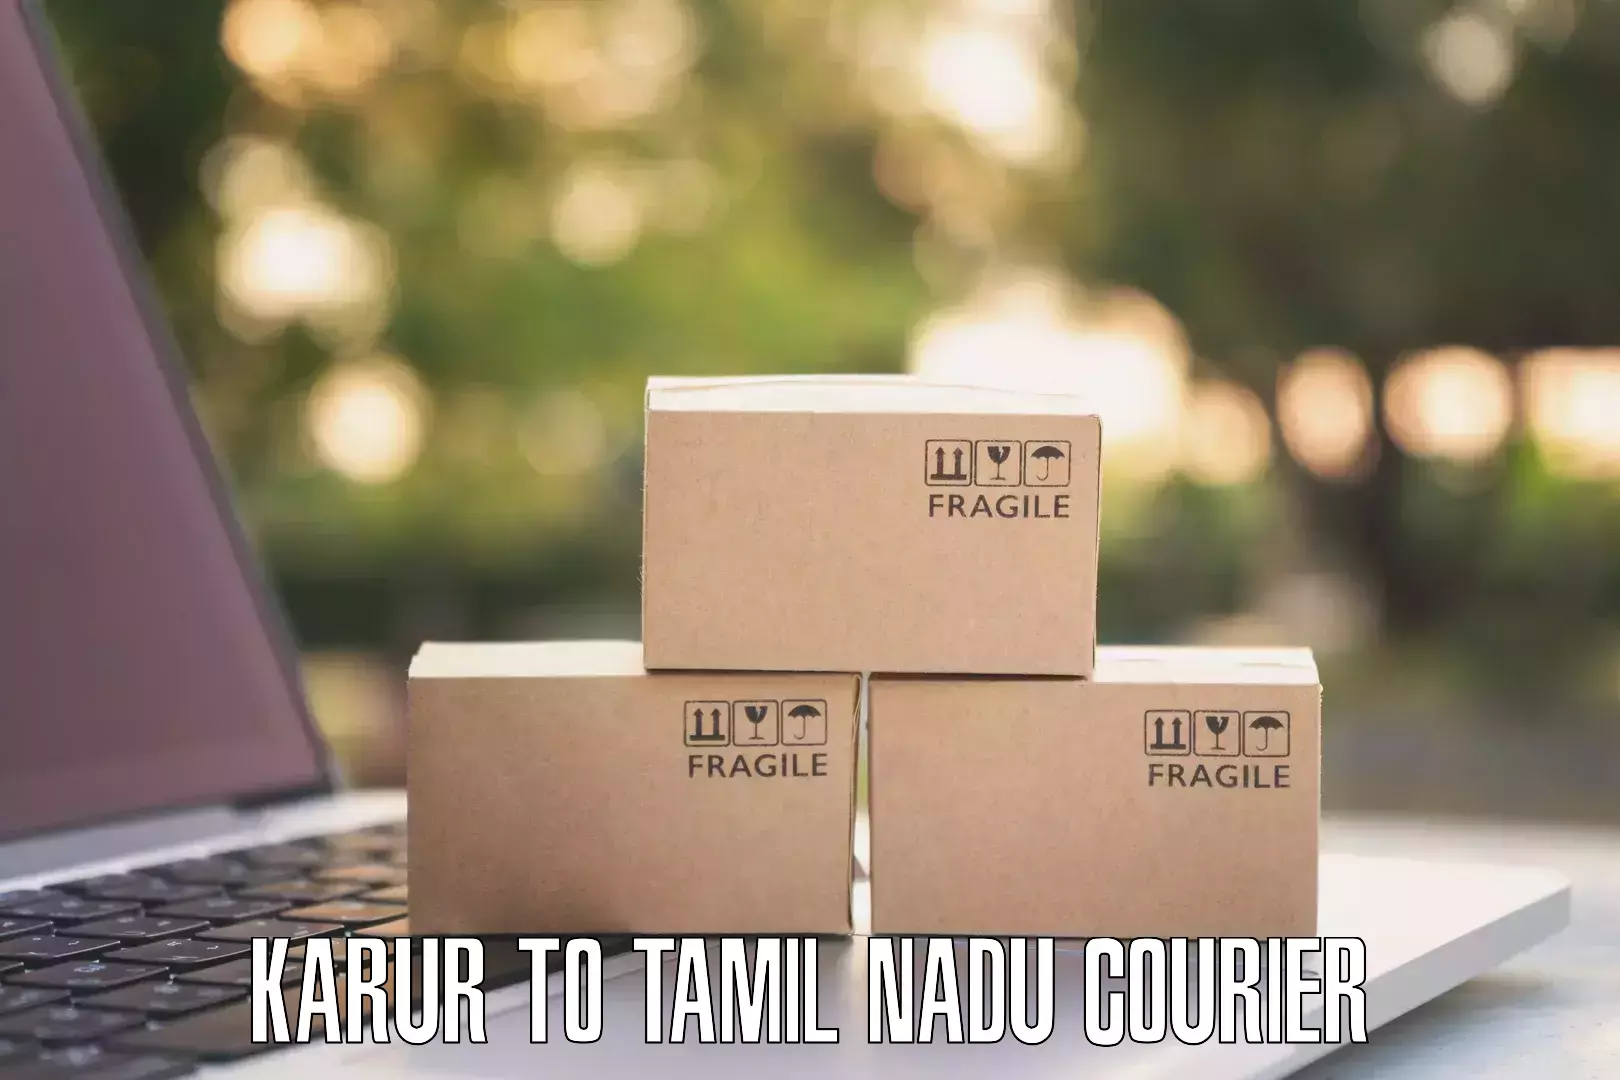 Local delivery service Karur to Periyakulam